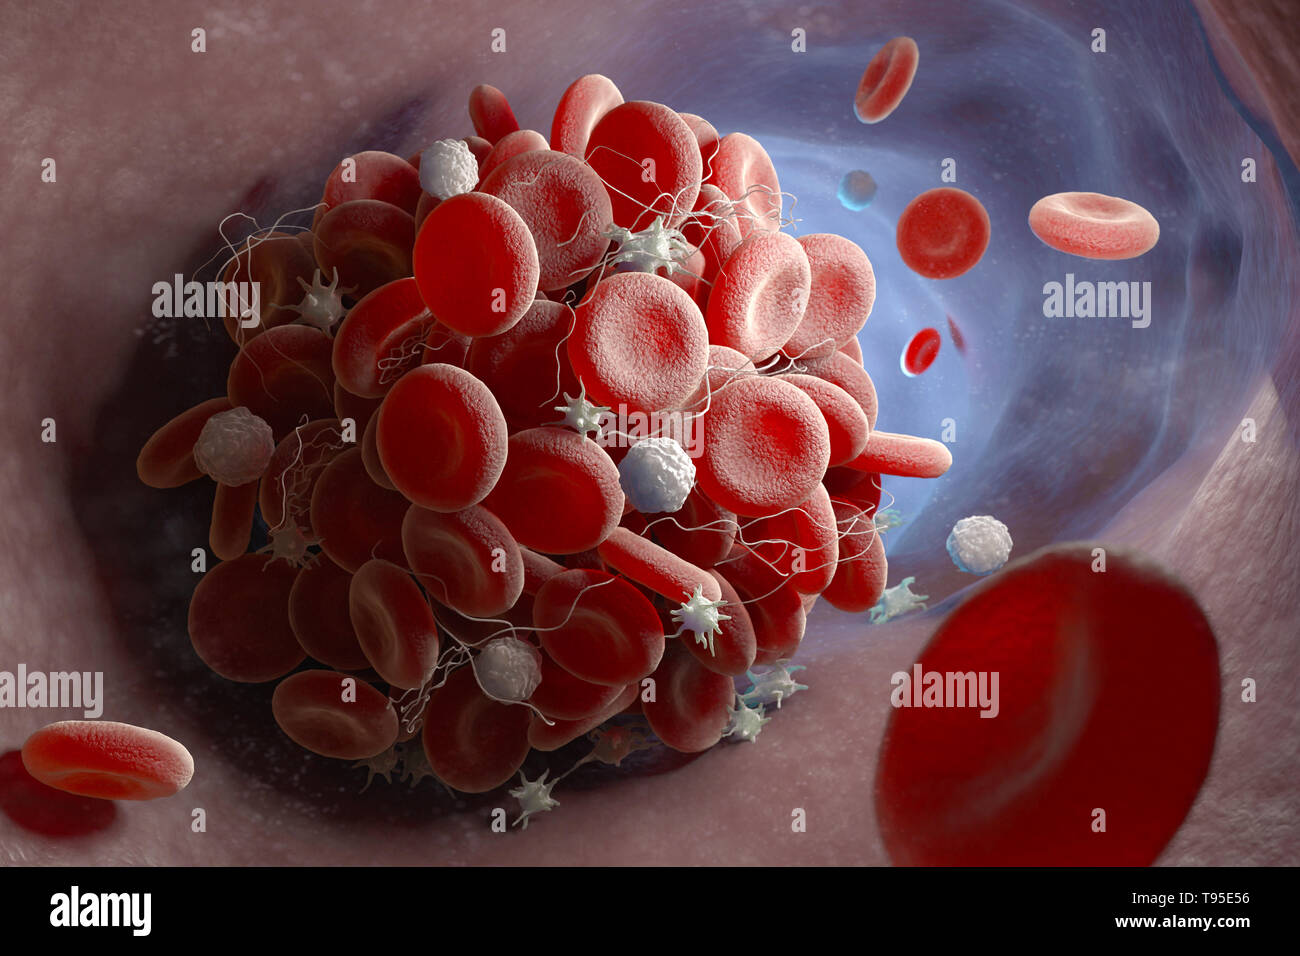 Depiction of a blood clot forming inside a blood vessel. 3D illustration Stock Photo